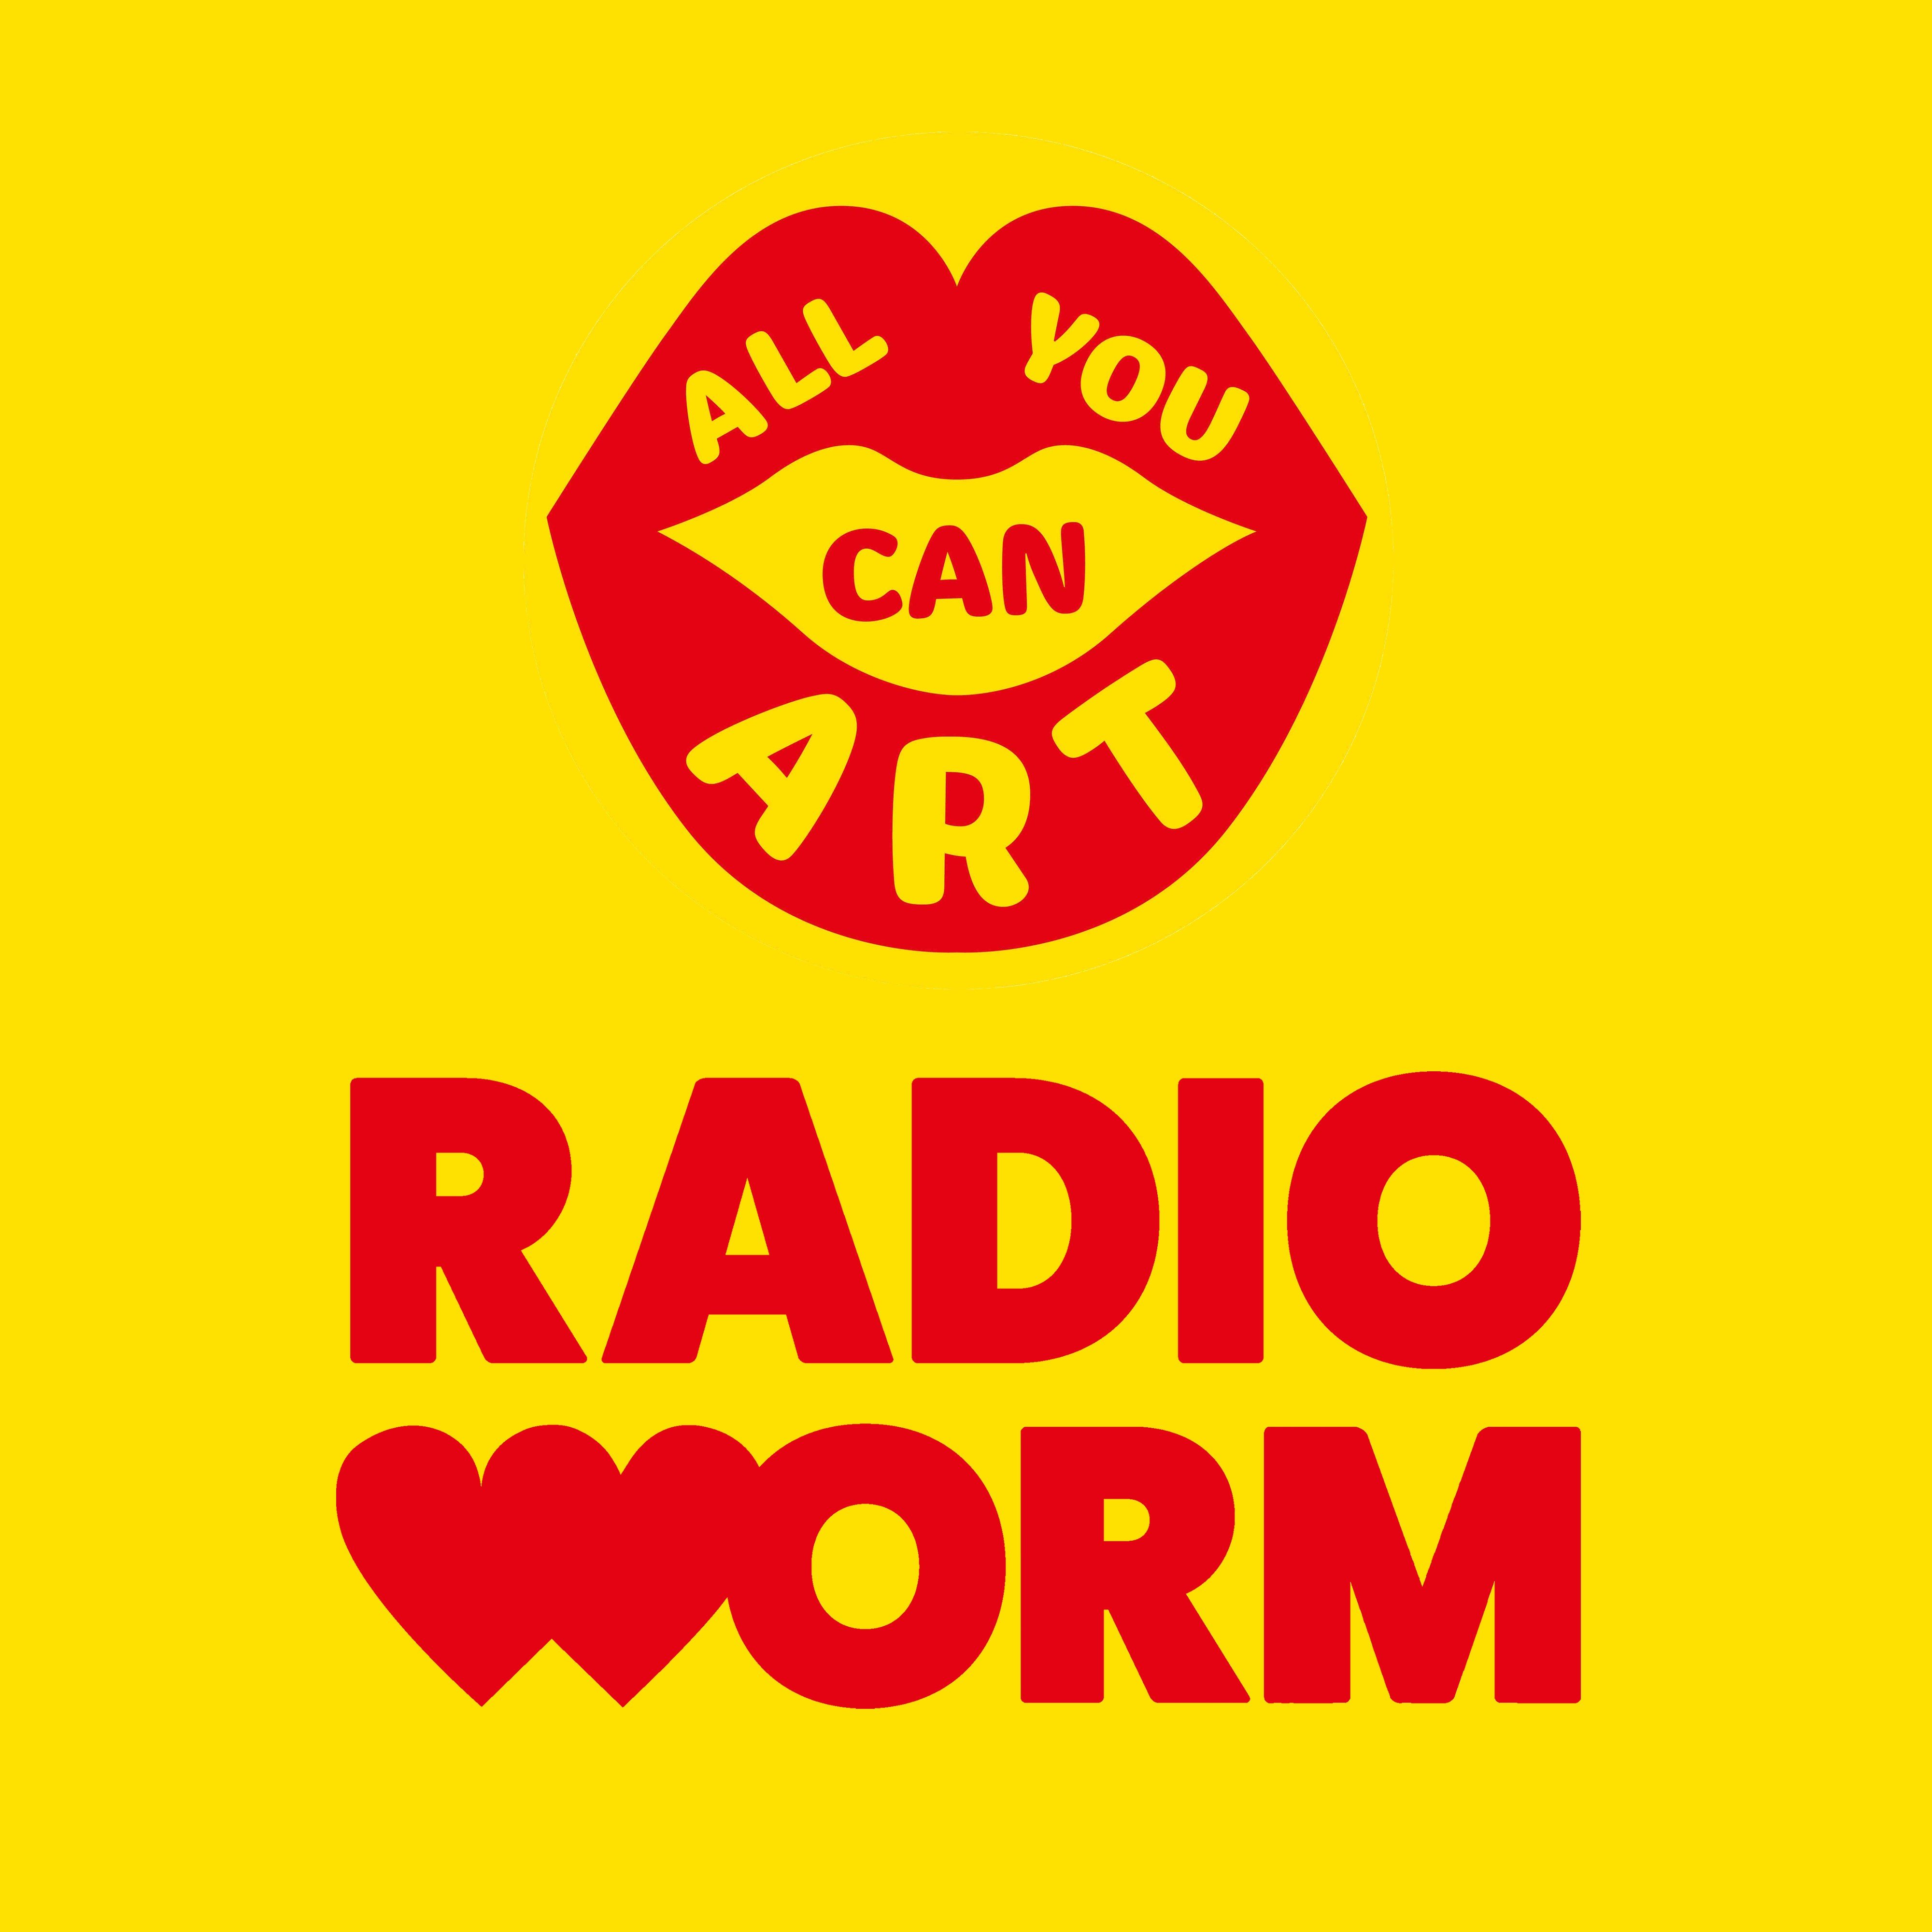 worm.jpg